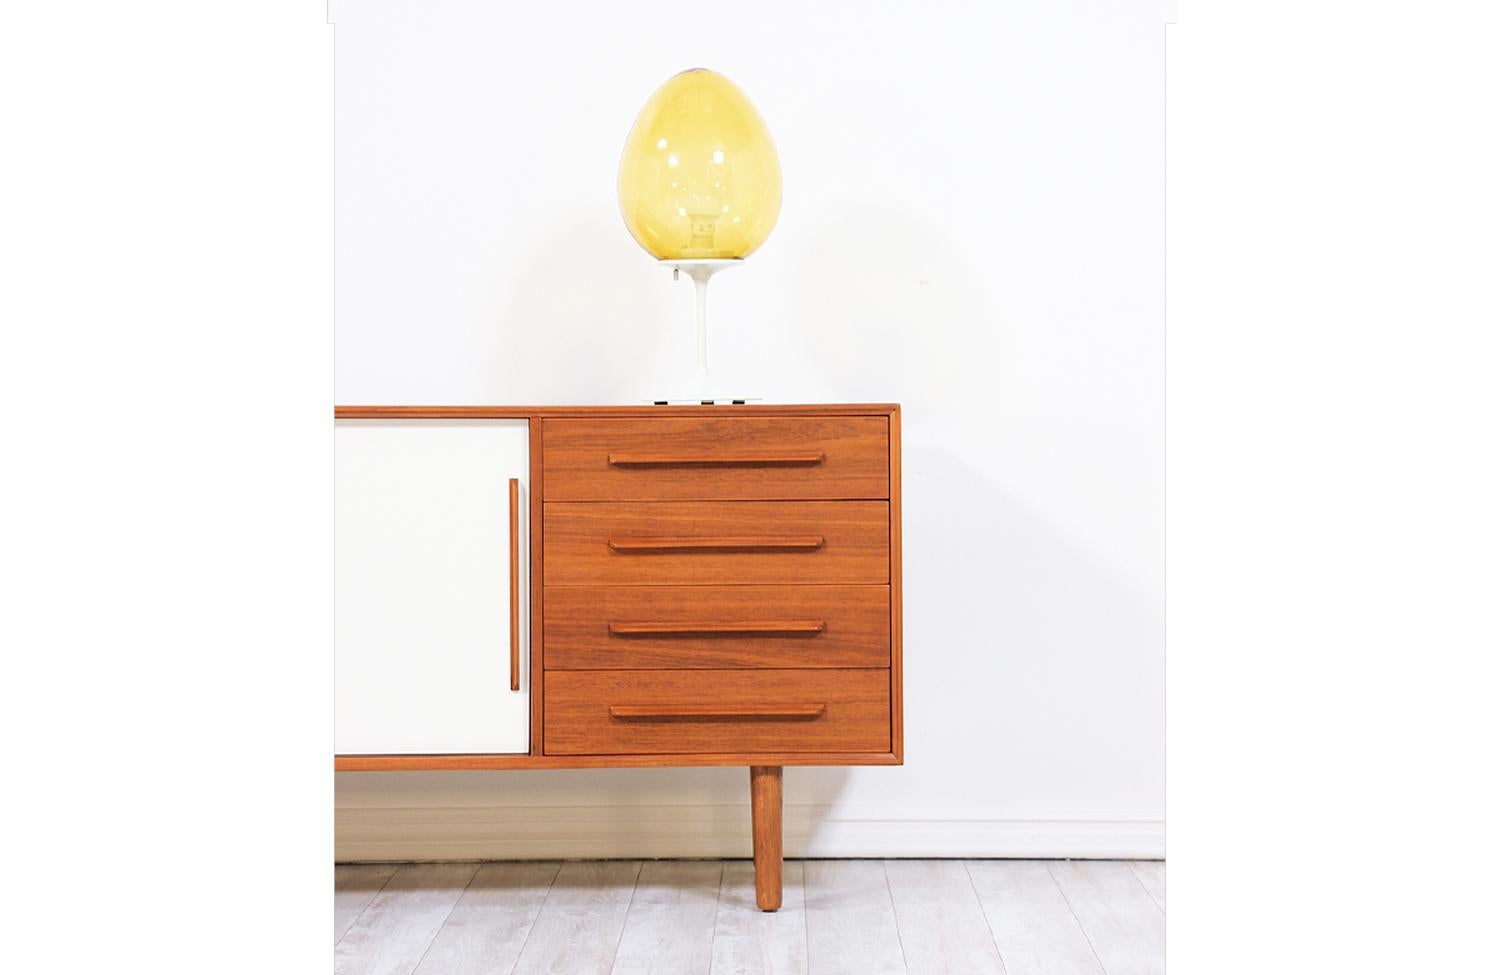 Bill Curry 'Stemlite' Table Lamp for Design Line (amerikanisch)